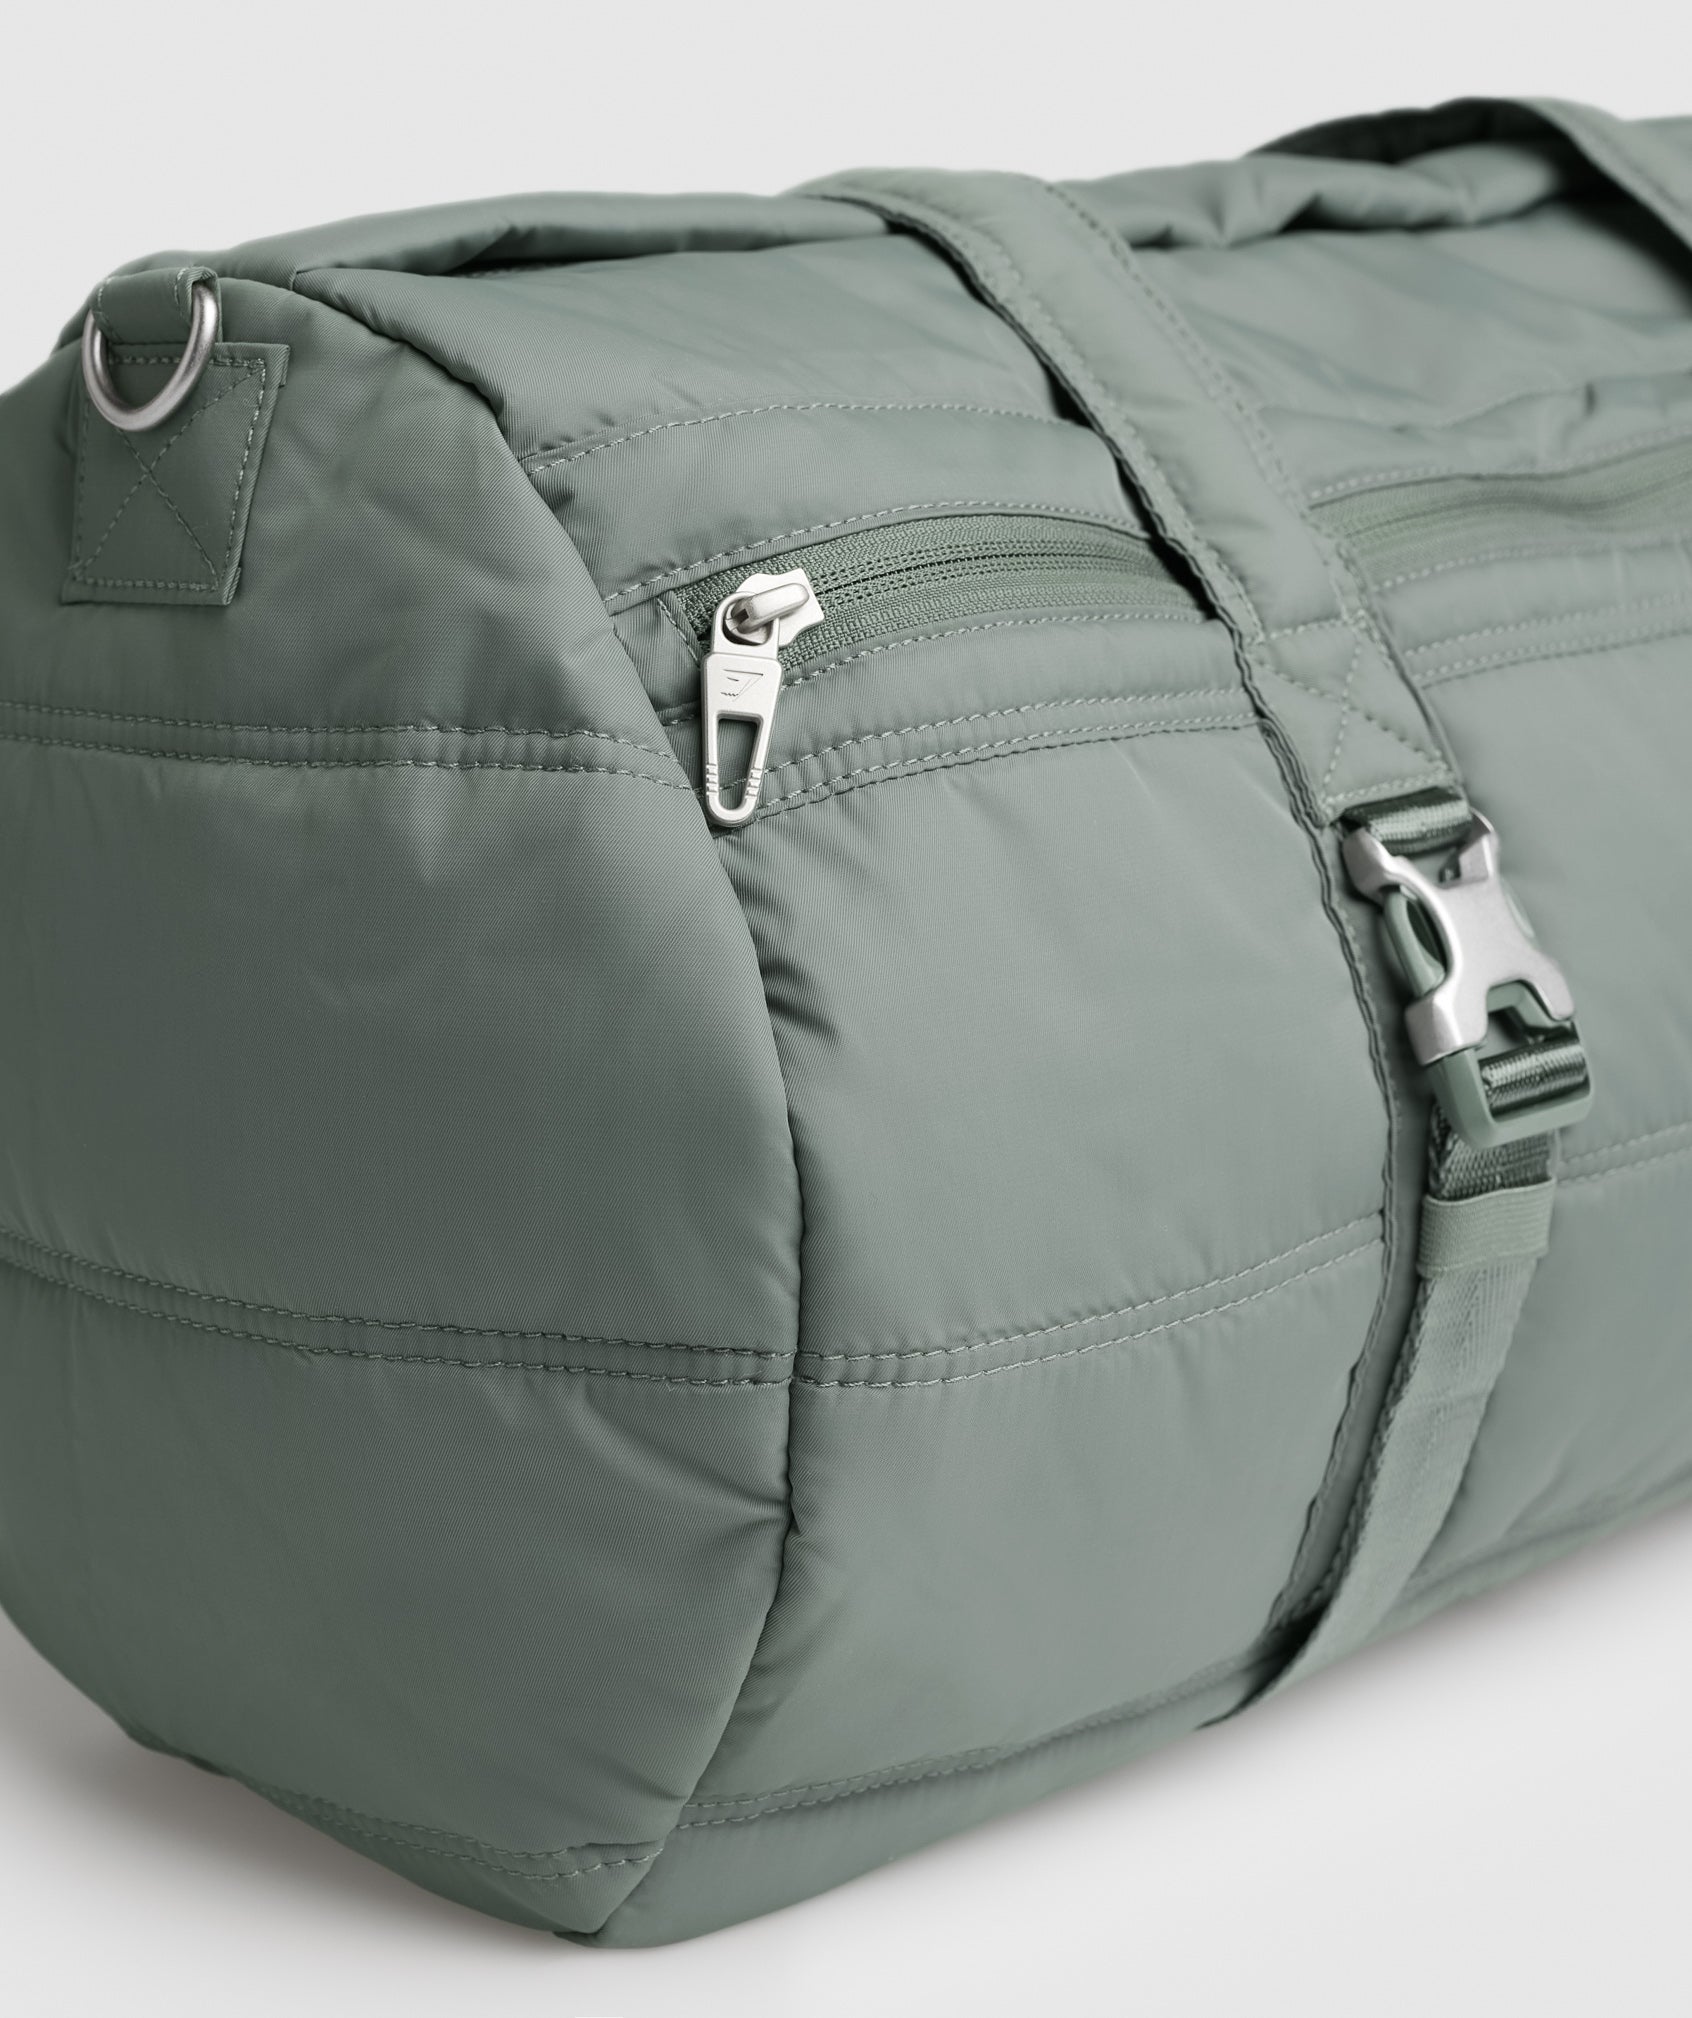 Premium Lifestyle Barrel Bag in Dusk Green - view 2